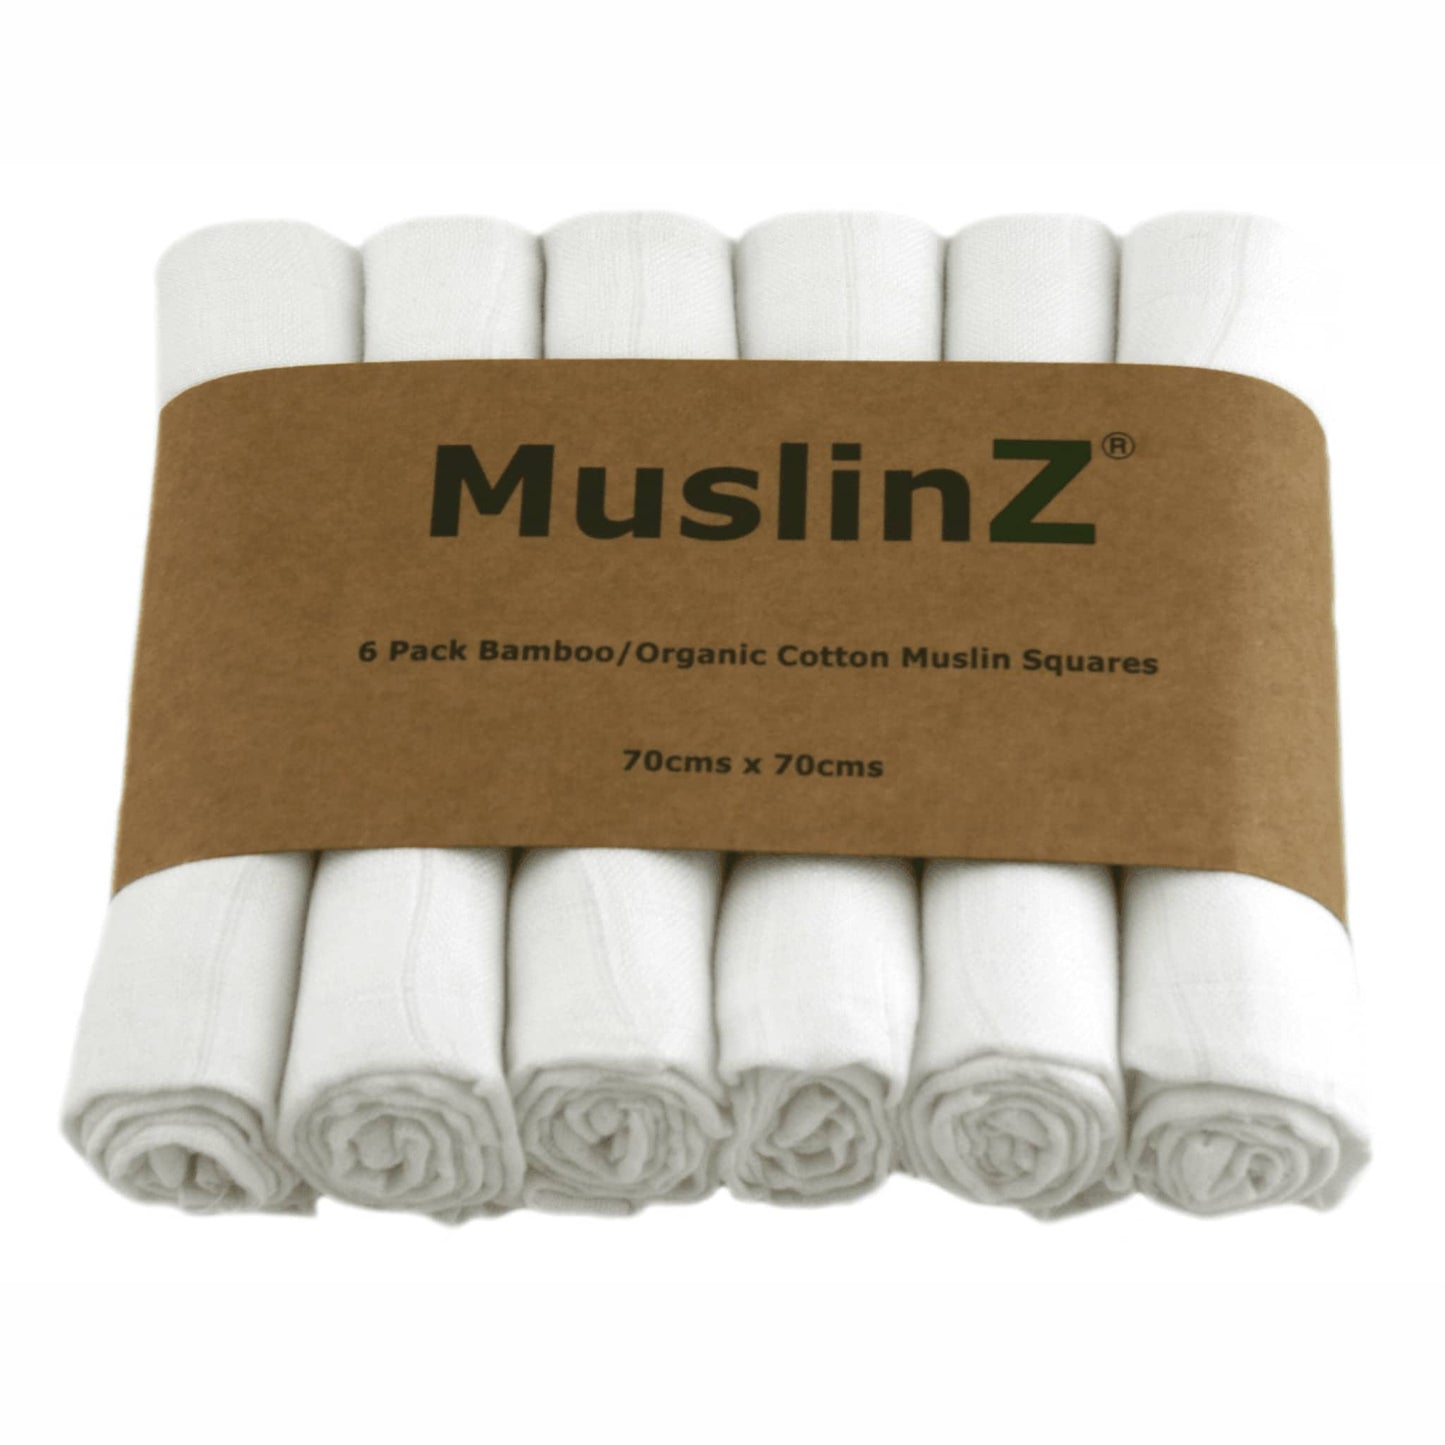 MuslinZ Bamboo/Organic Cotton Muslin Squares White 6 pack